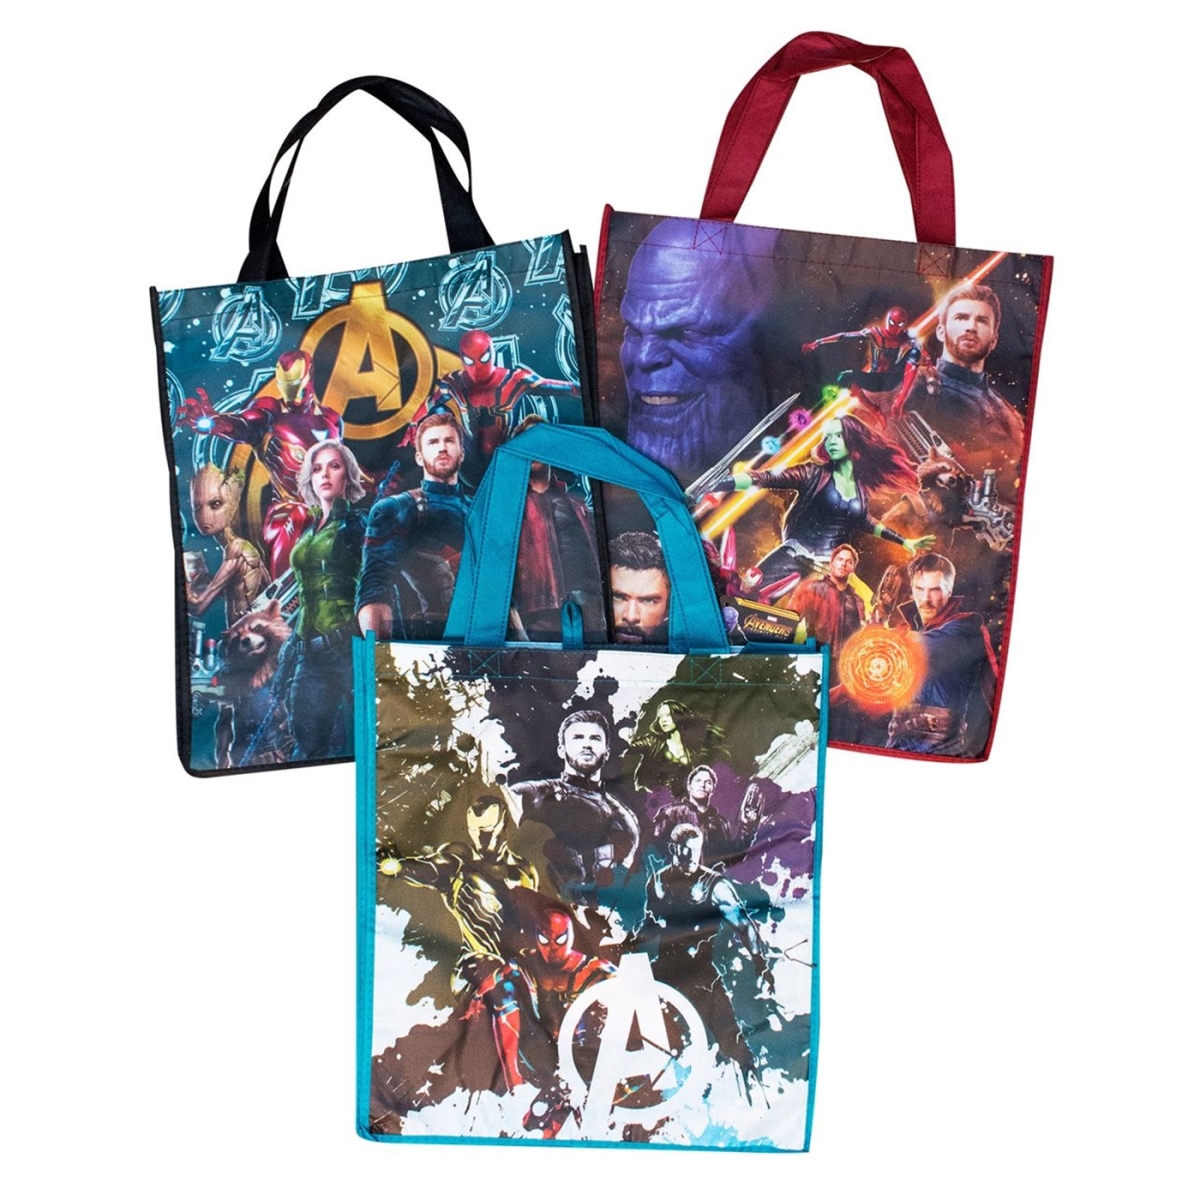 110795 1 Of 3 Avengers Infinity War Tote Bag Fandom Shop - roblox death sound tote bag